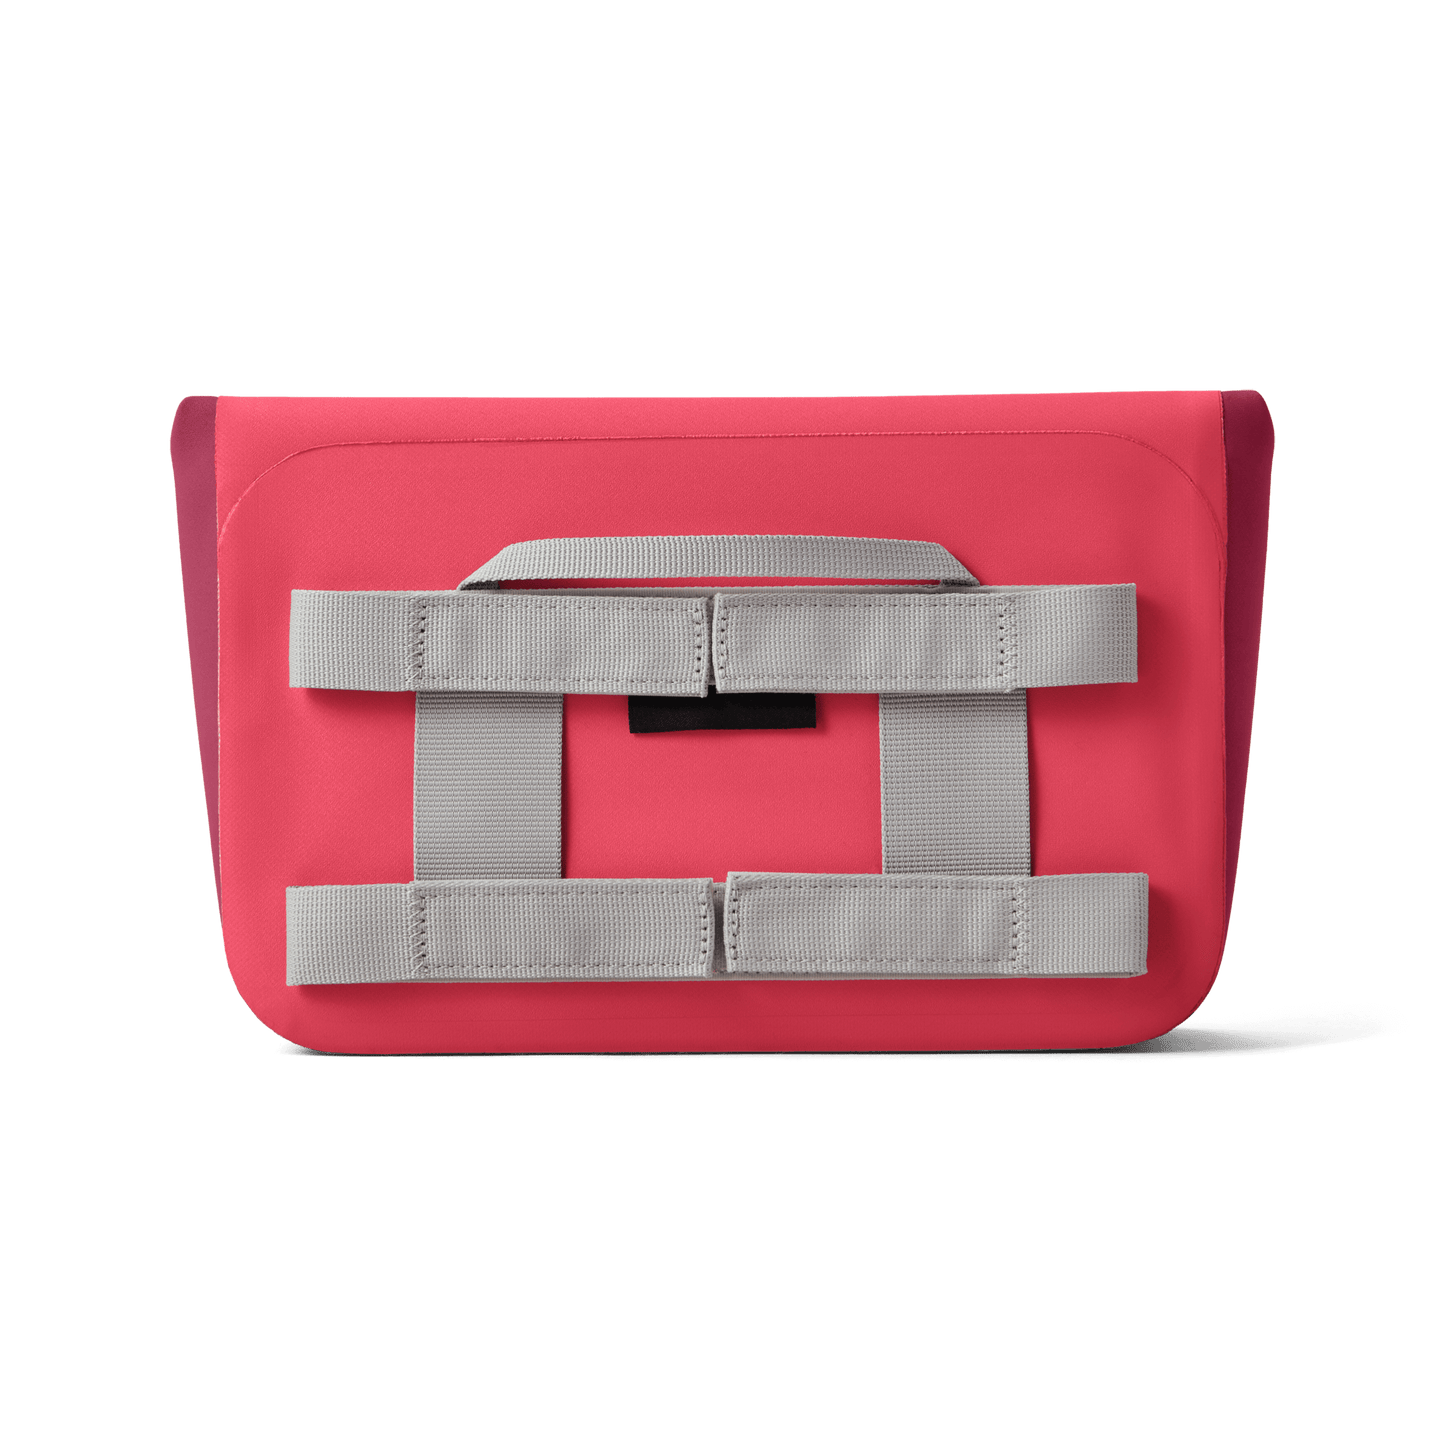 YETI Sidekick Dry® Gear Case Bimini Pink